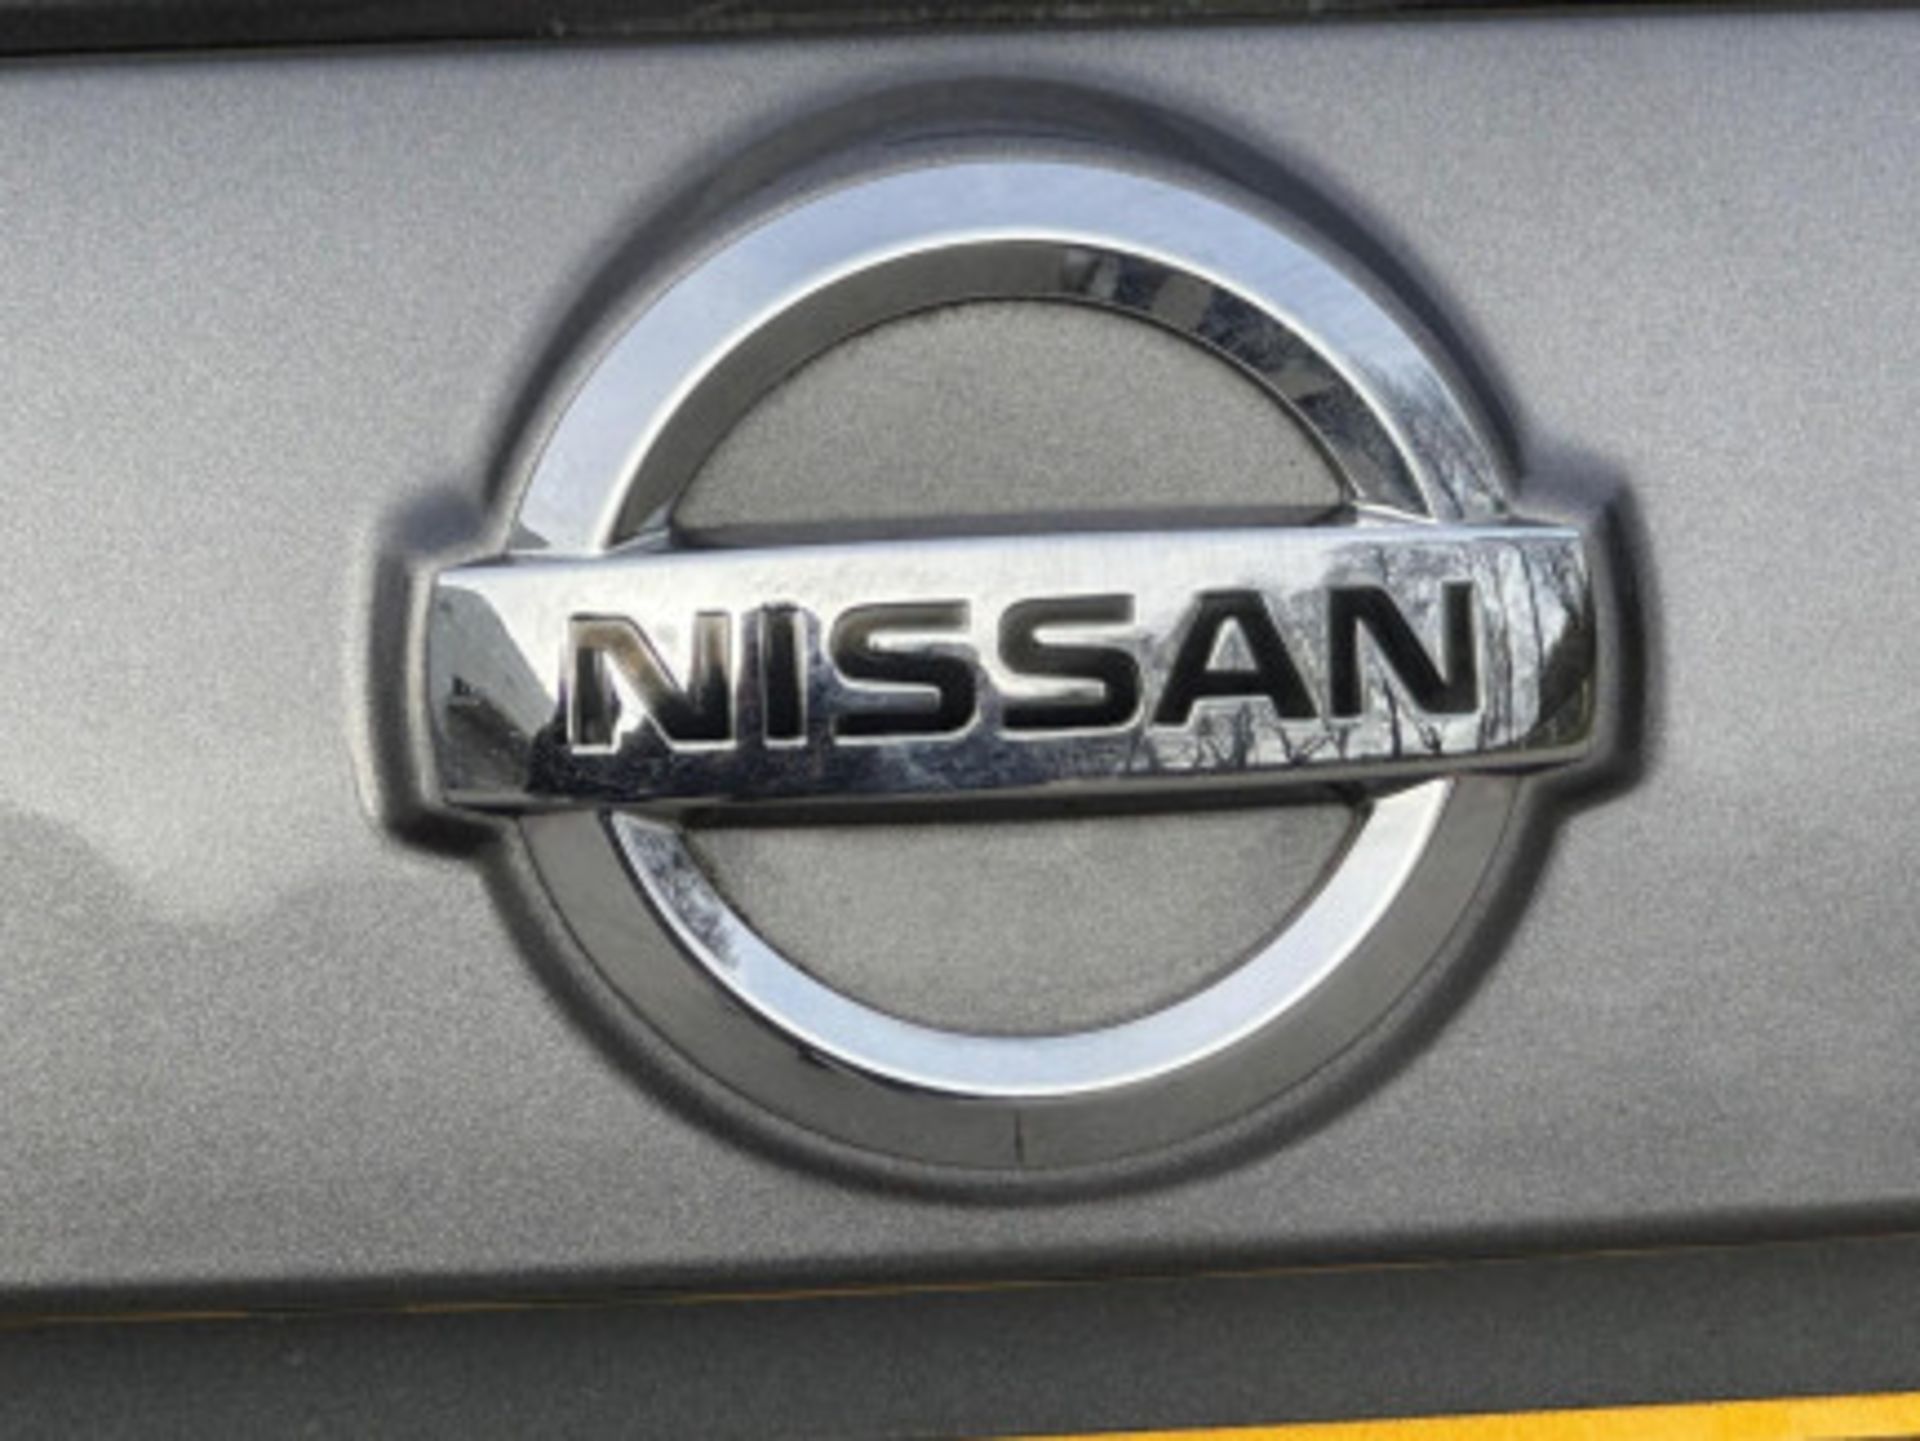 2011 NISSAN JUKE 1.5 DCI ACENTA SPORT 5-DOOR SUV >>--NO VAT ON HAMMER--<< - Image 59 of 112